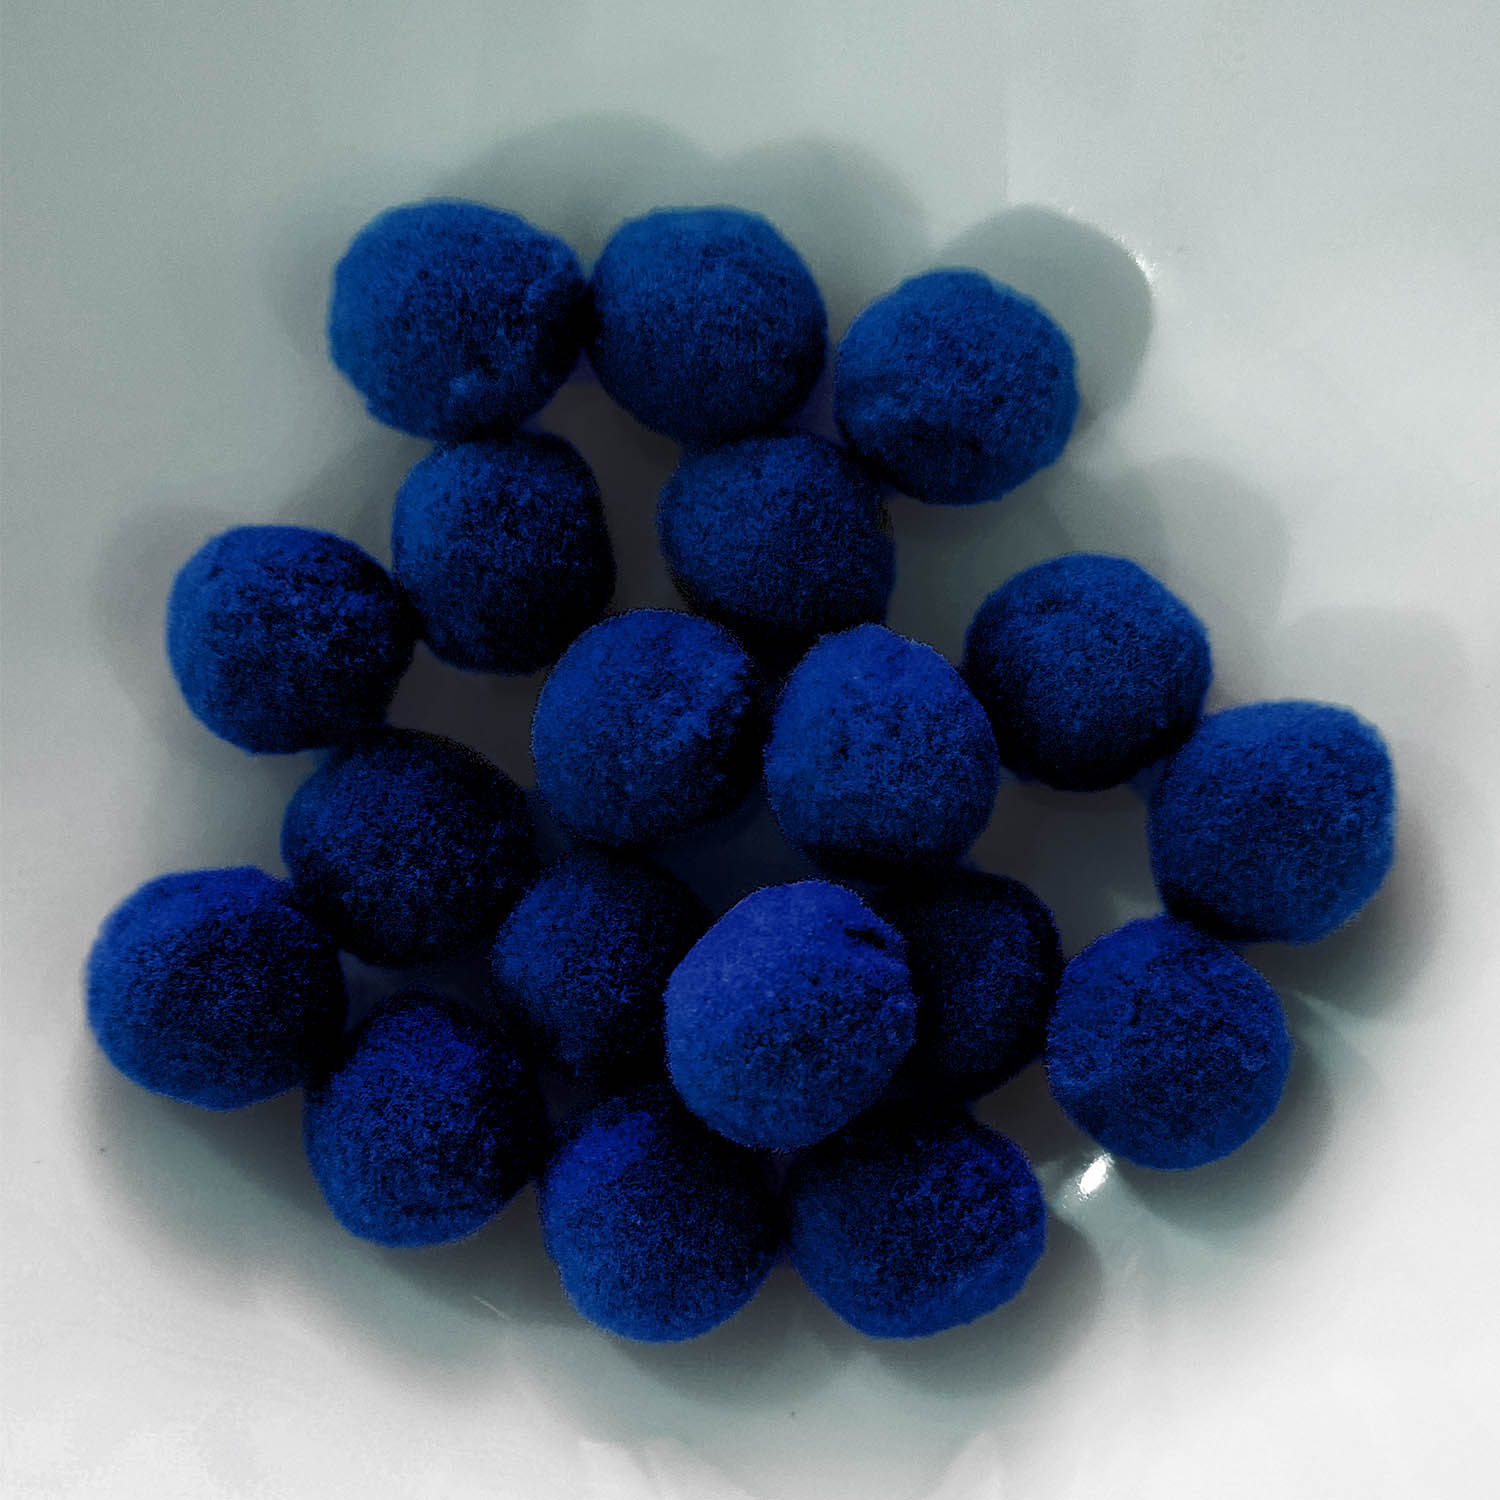 PomPon / Bälle aus Baumwolle - 20 mm / 25er Set - Blau dunkel / Königsblau